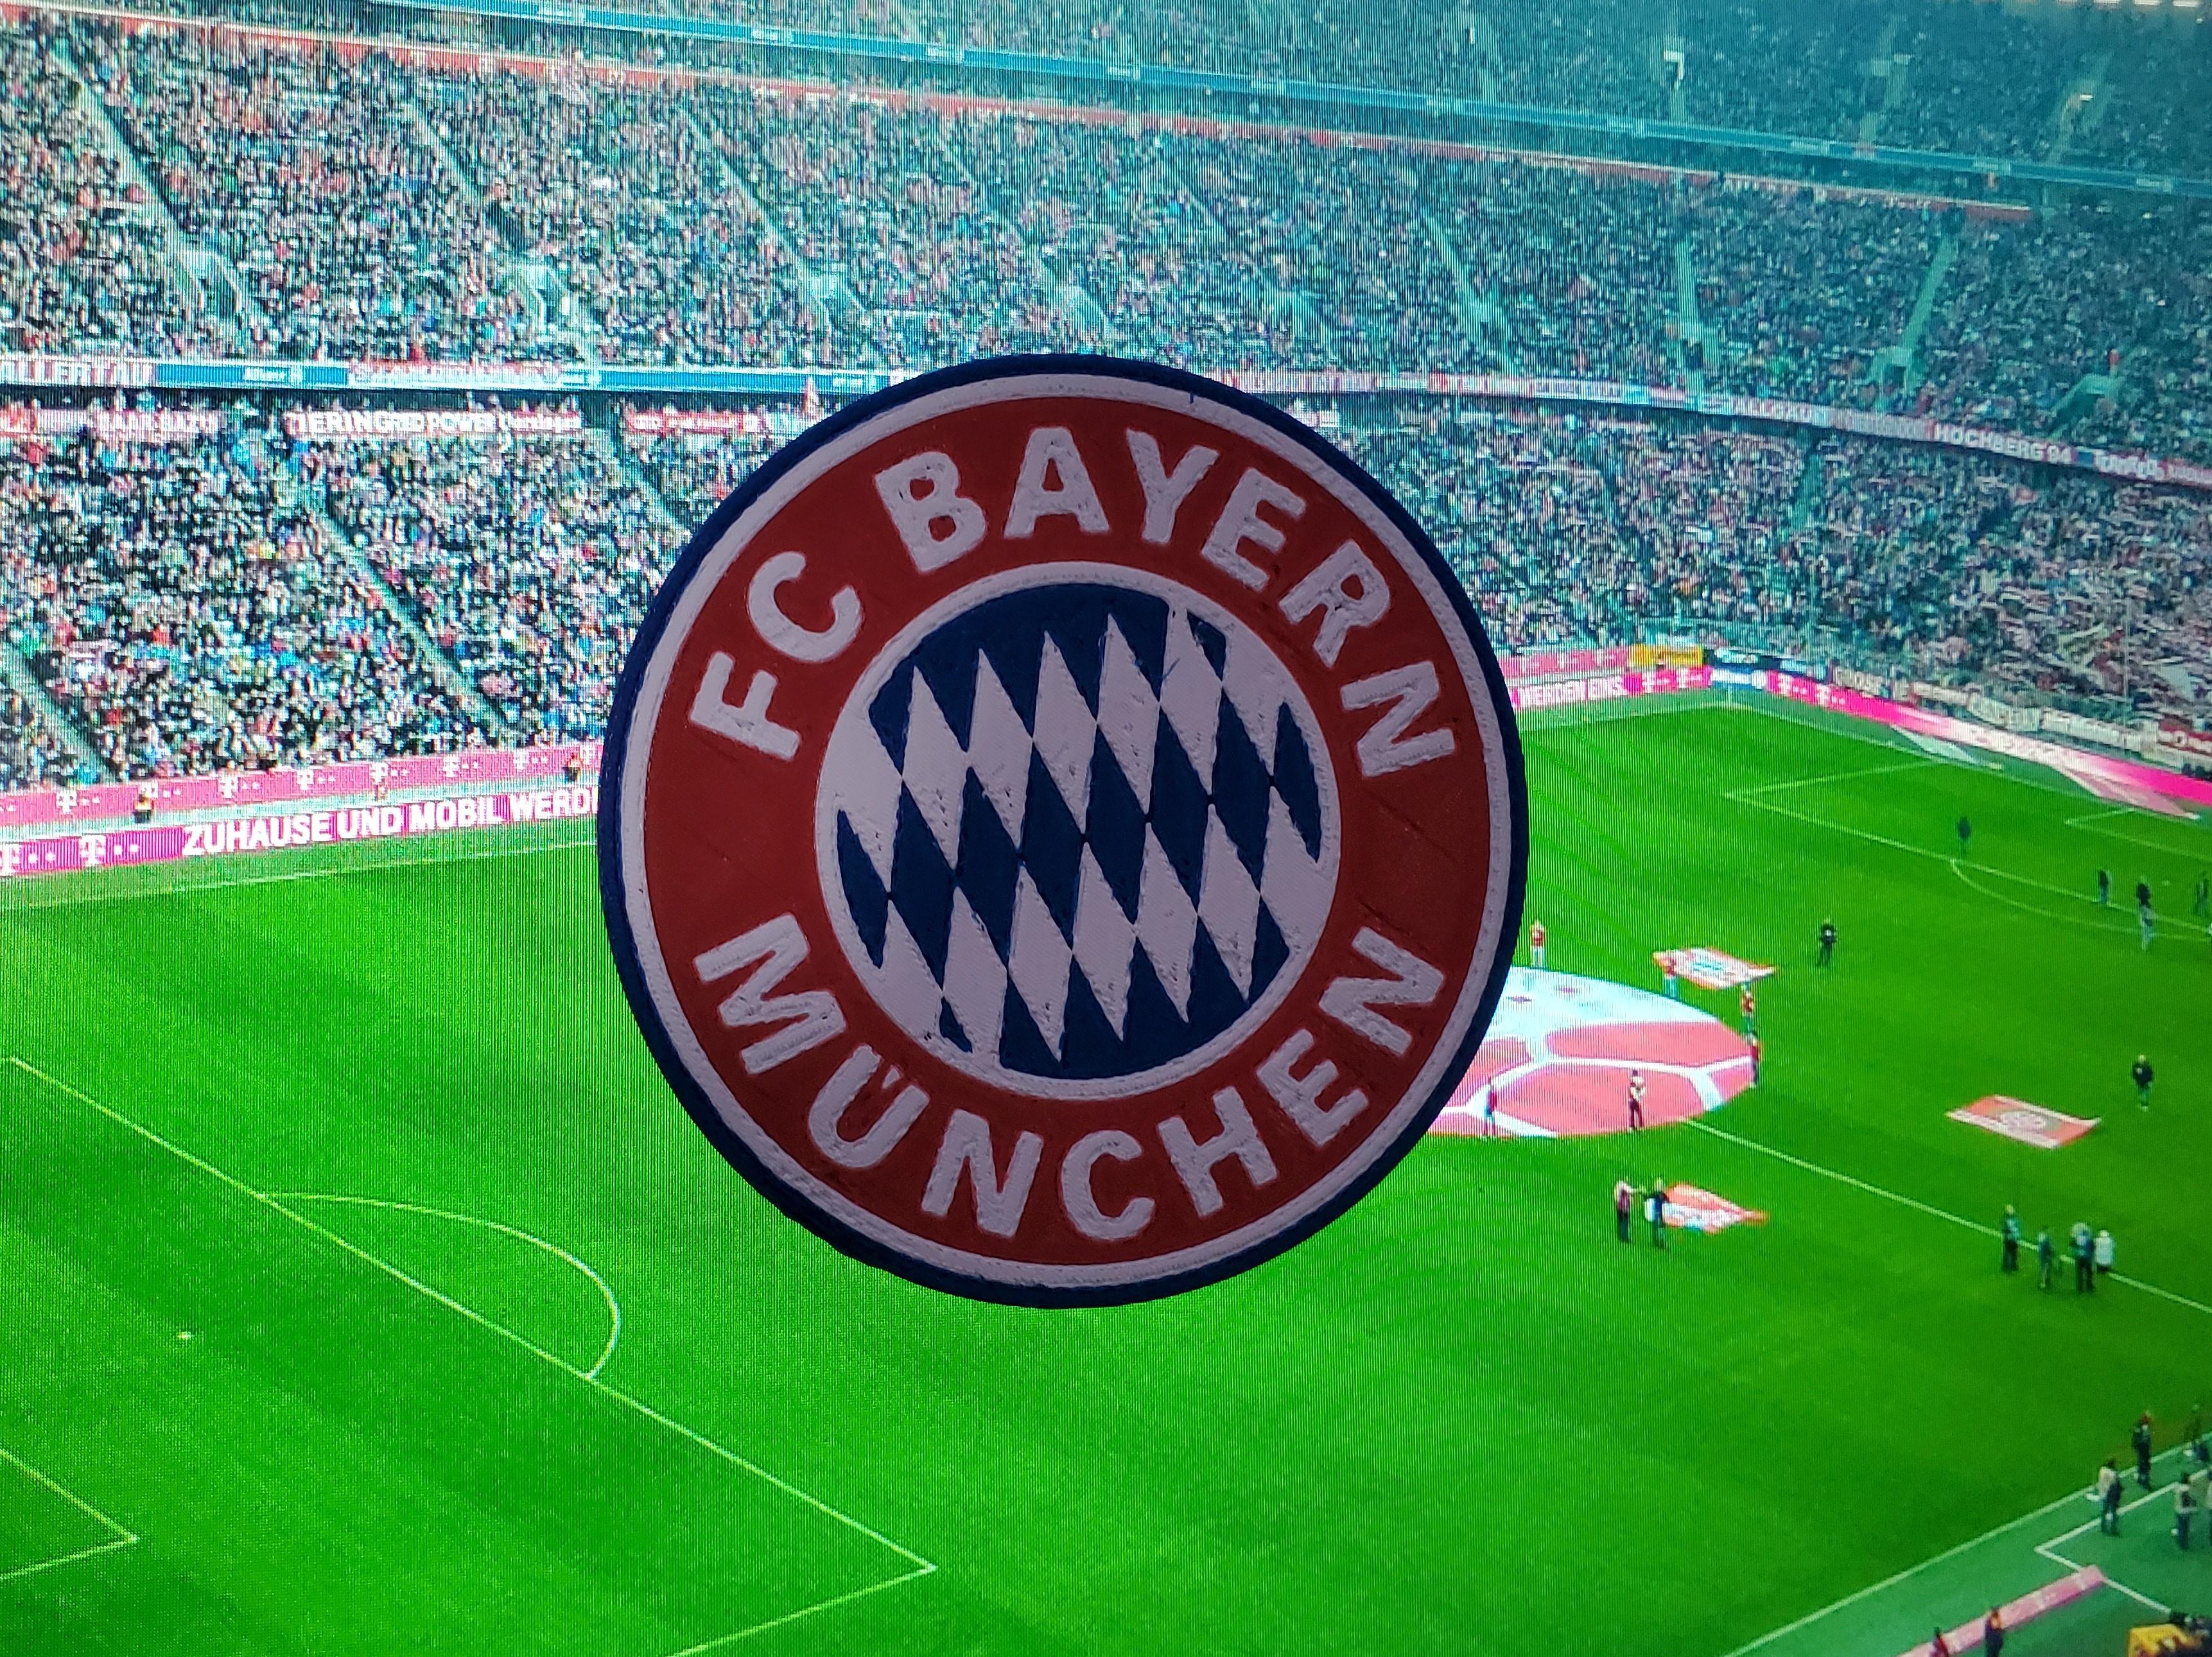 AMS / MMU Fußball-Club Bayern München e. V. coaster or plaque. 3d model